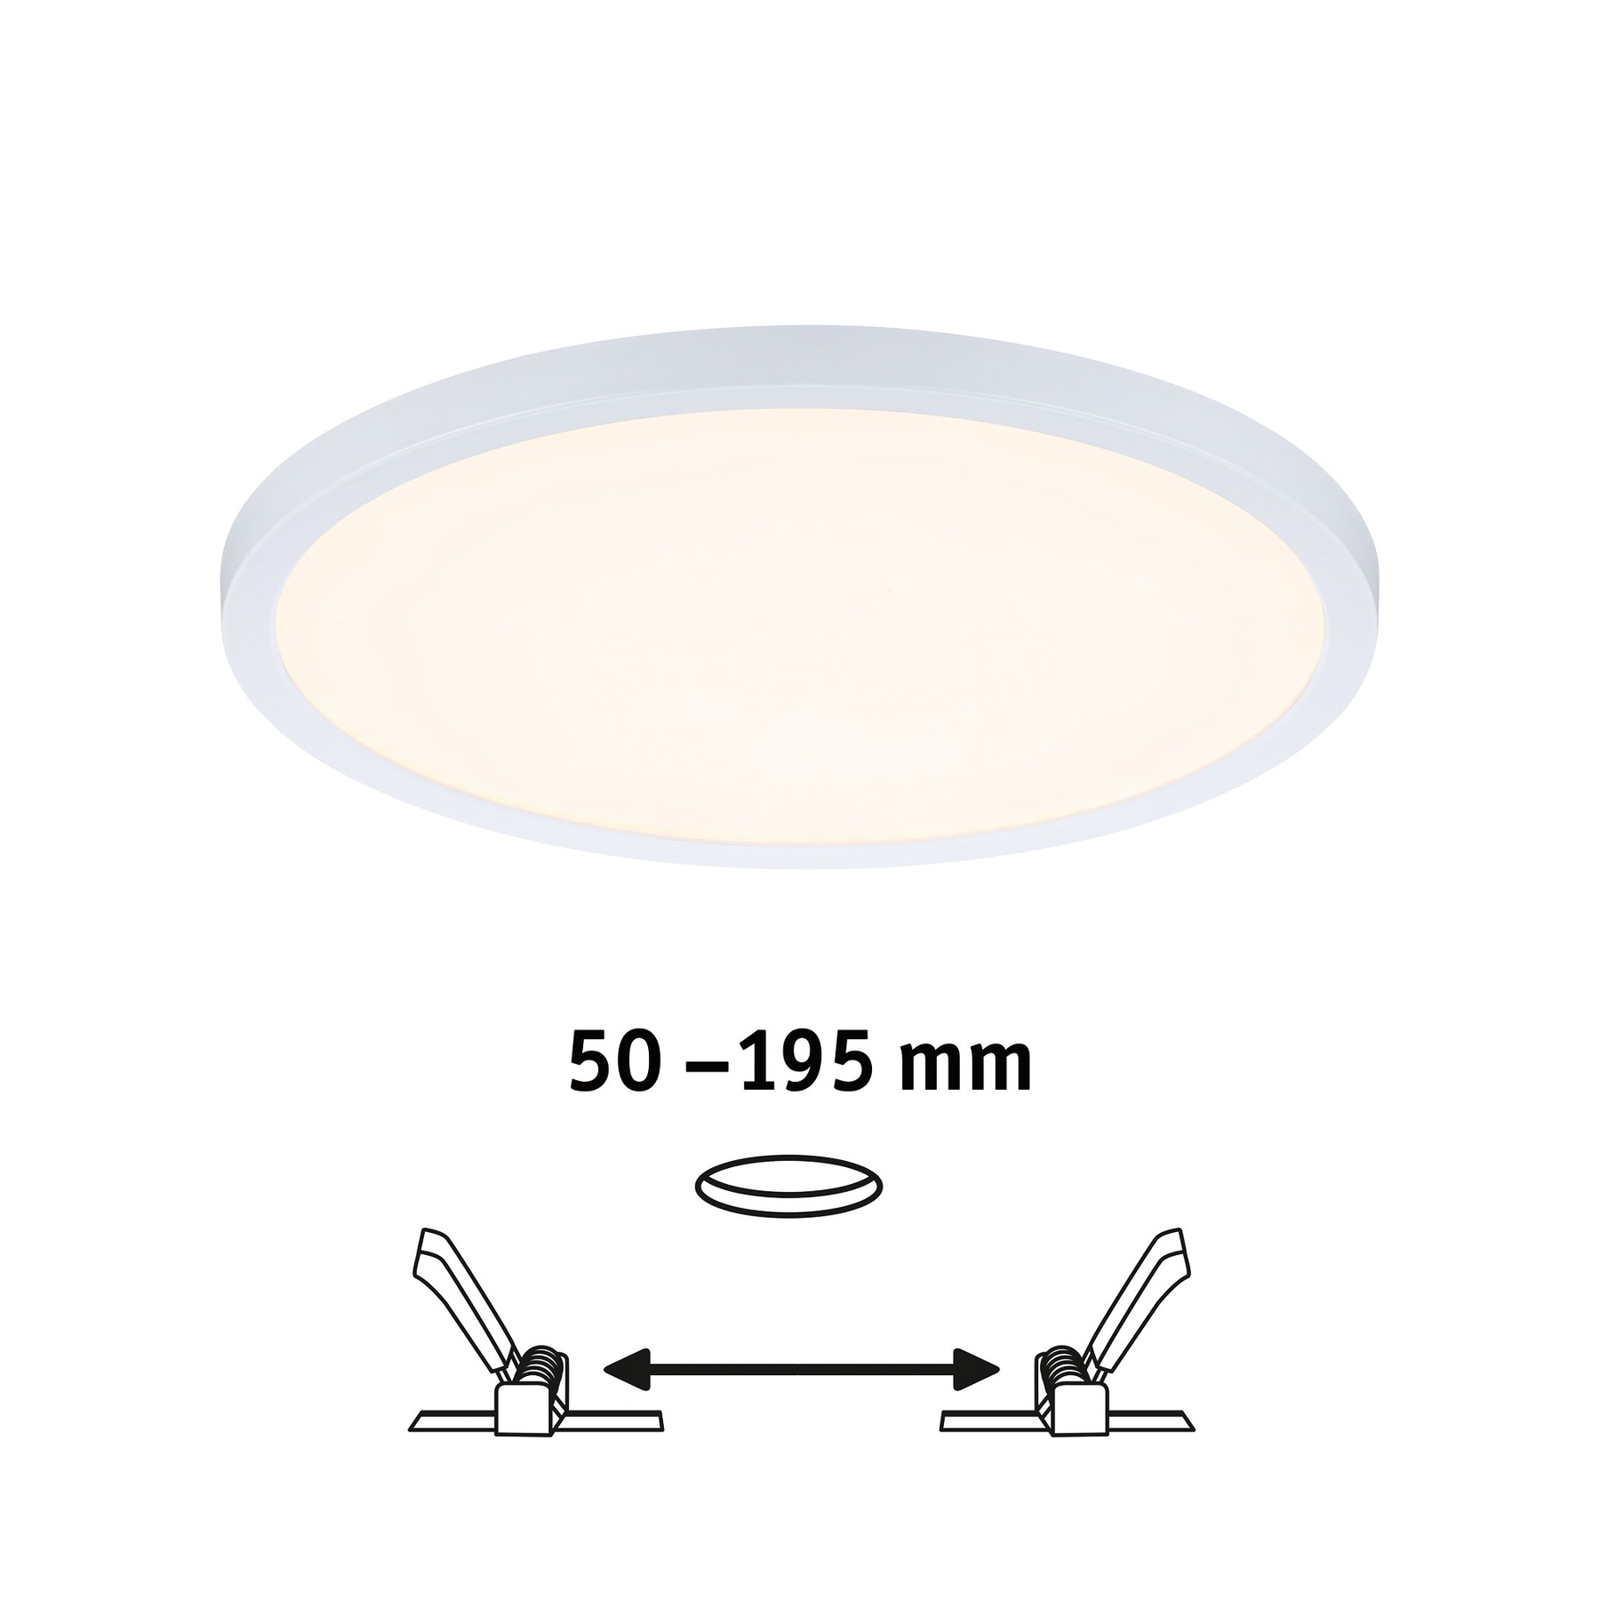 Paulmann LED Aero dimtowarm rotondo bianco 23cm